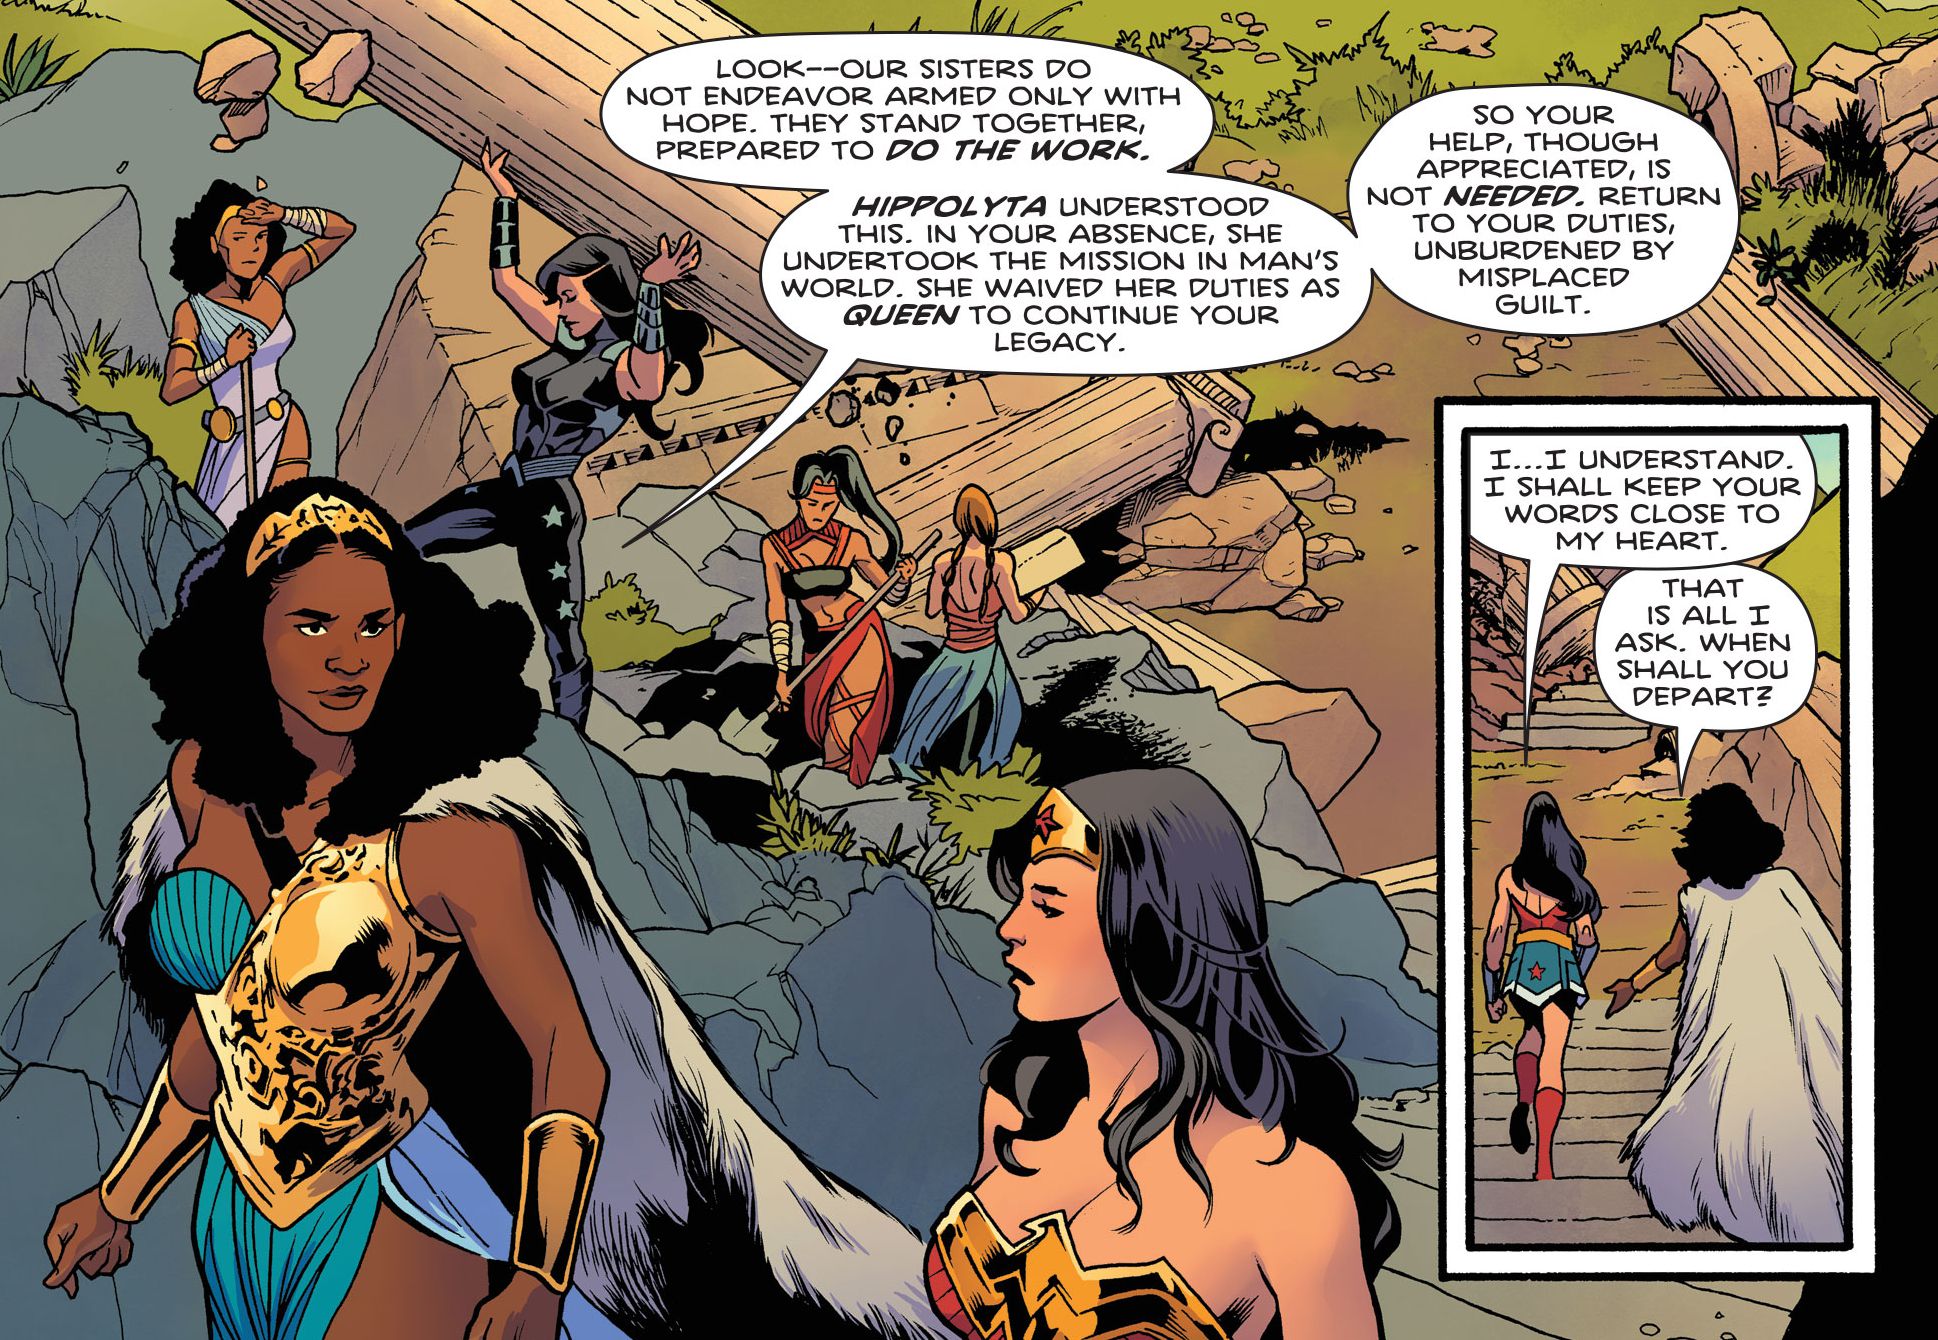 Wonder Woman talks with Nubia